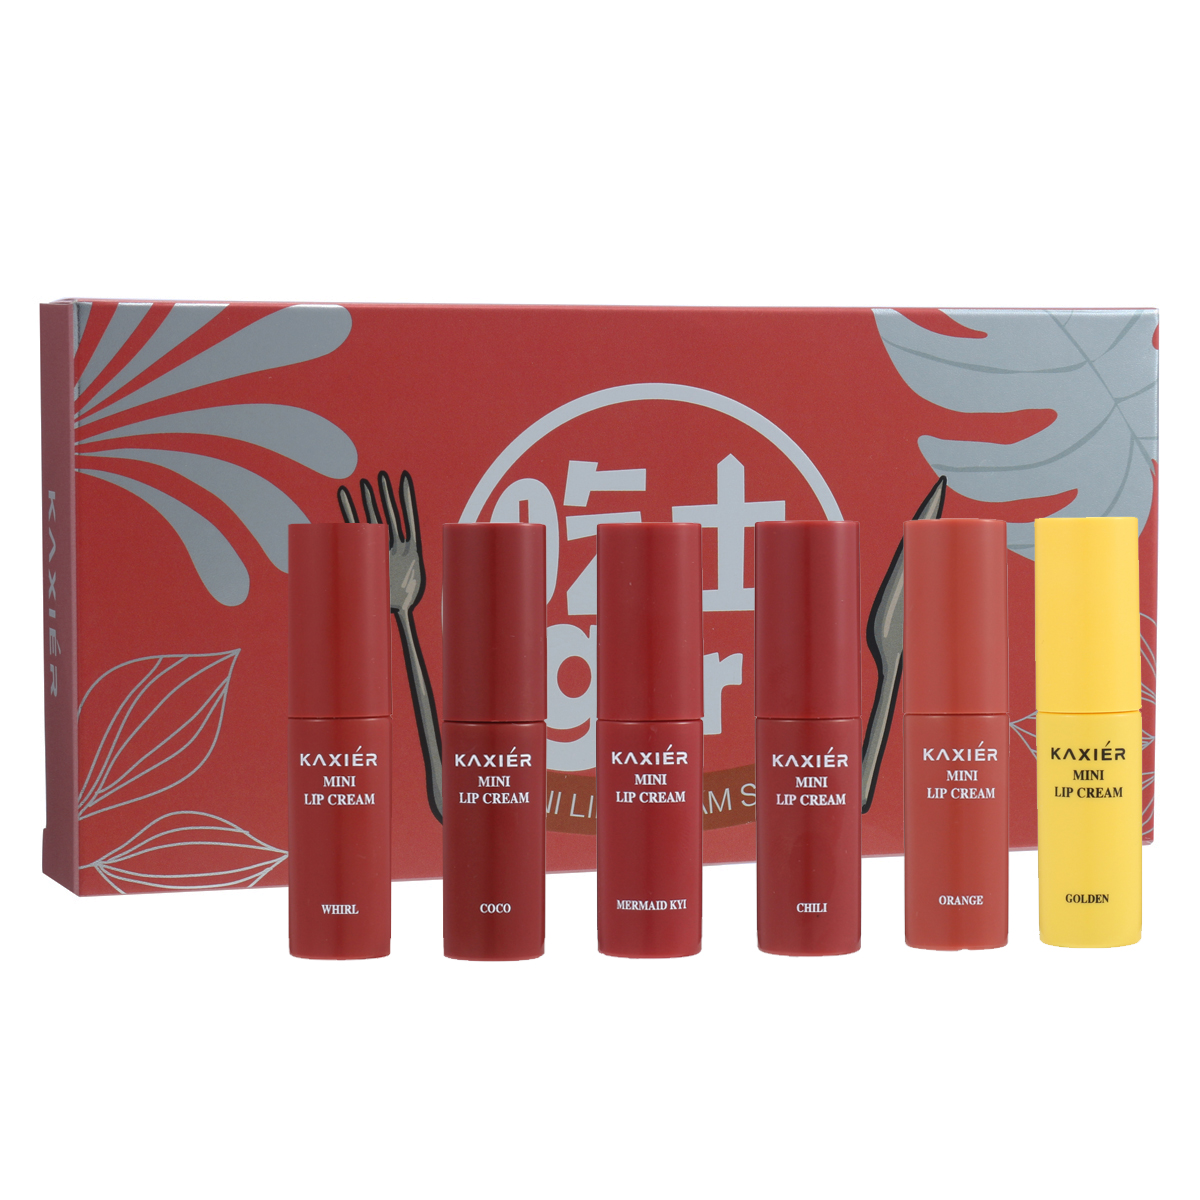 6pcs Liquid Matte Batom Pen Lip Maquiagem Set Lasting Impermeável Smudge Lipgloss Glaze